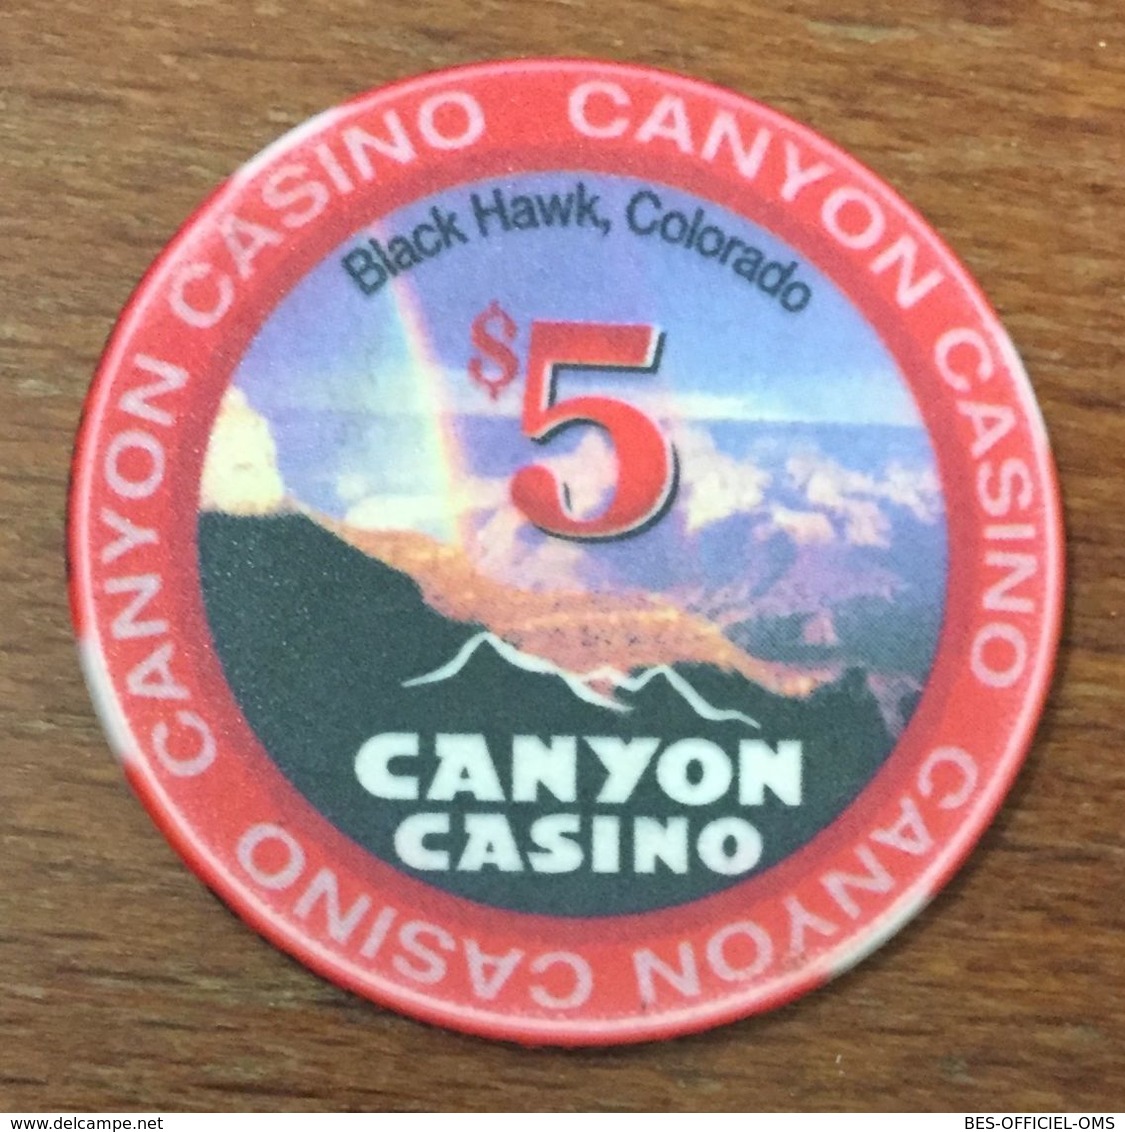 ÉTATS-UNIS USA COLORADO BLACK HAWK CANYON CASINO INDIAN CHIP $5 JETON TOKEN COIN CLOSED FERMÉ - Casino